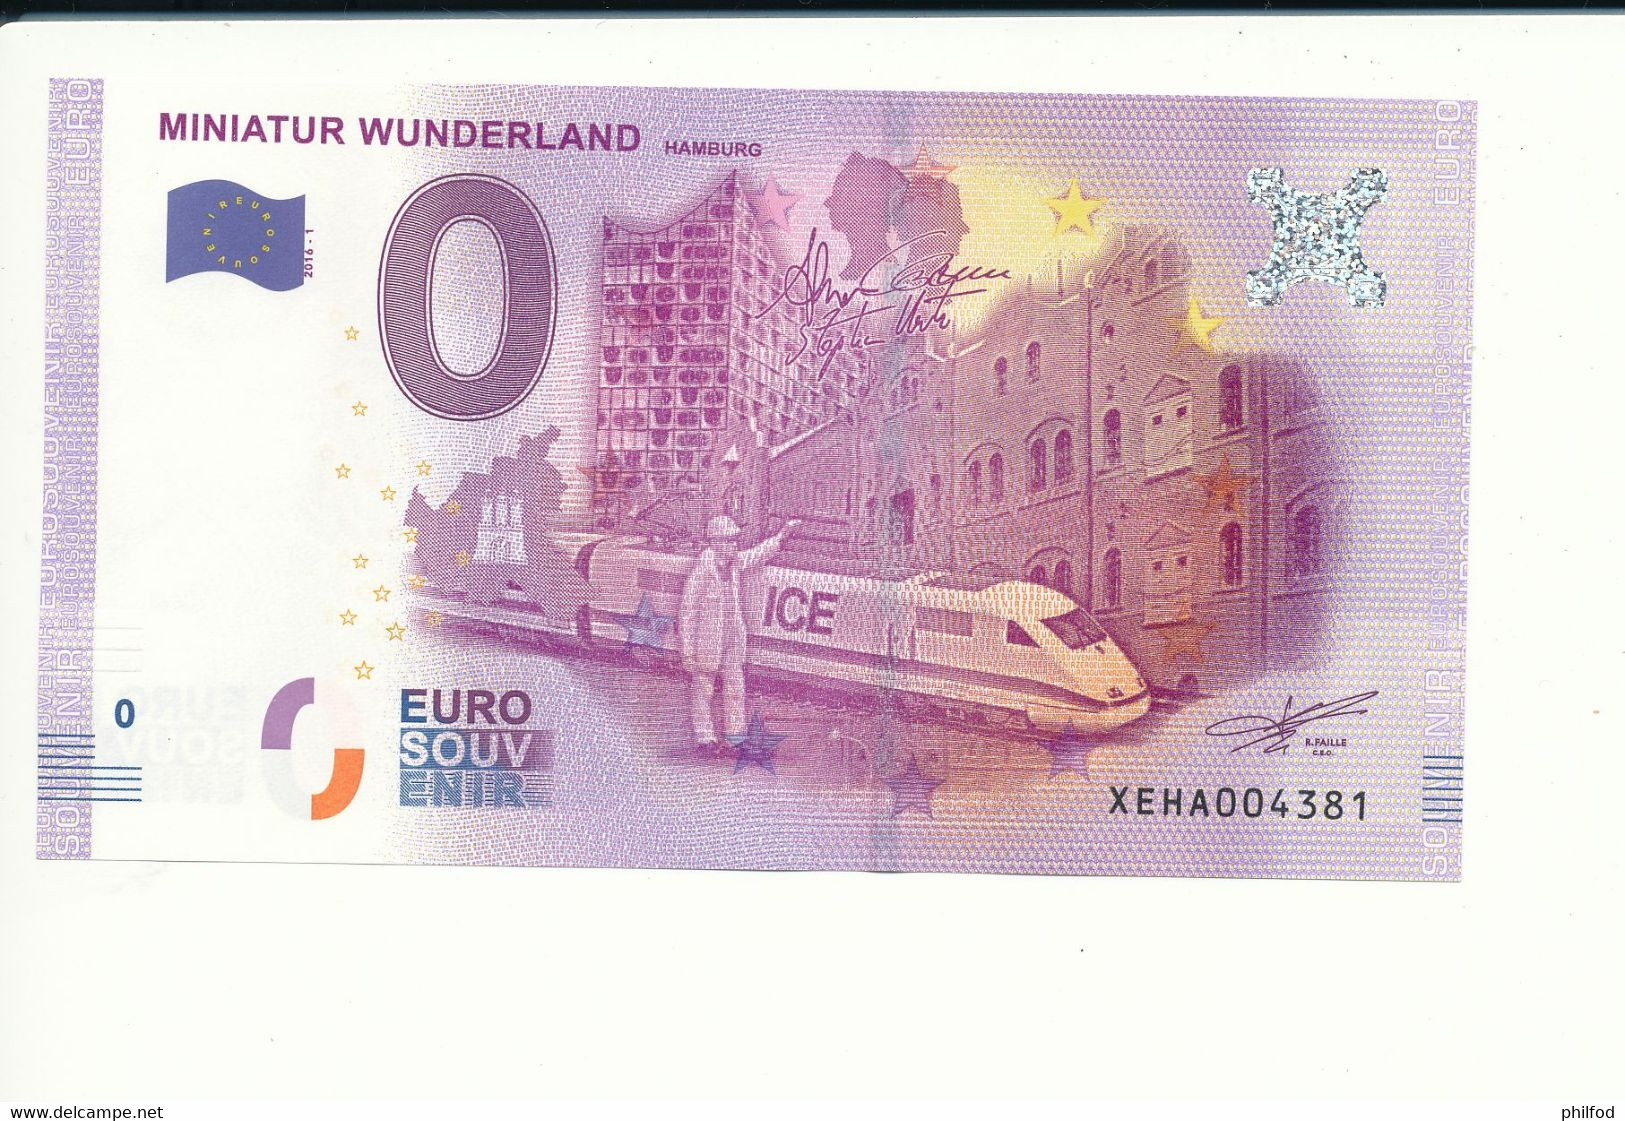 Billet Souvenir - 0 Euro - XEHA - 2016- 1 - MINIATUR WUNDERLAND HAMBURG - N° 4381 - Billet épuisé - Lots & Kiloware - Banknotes